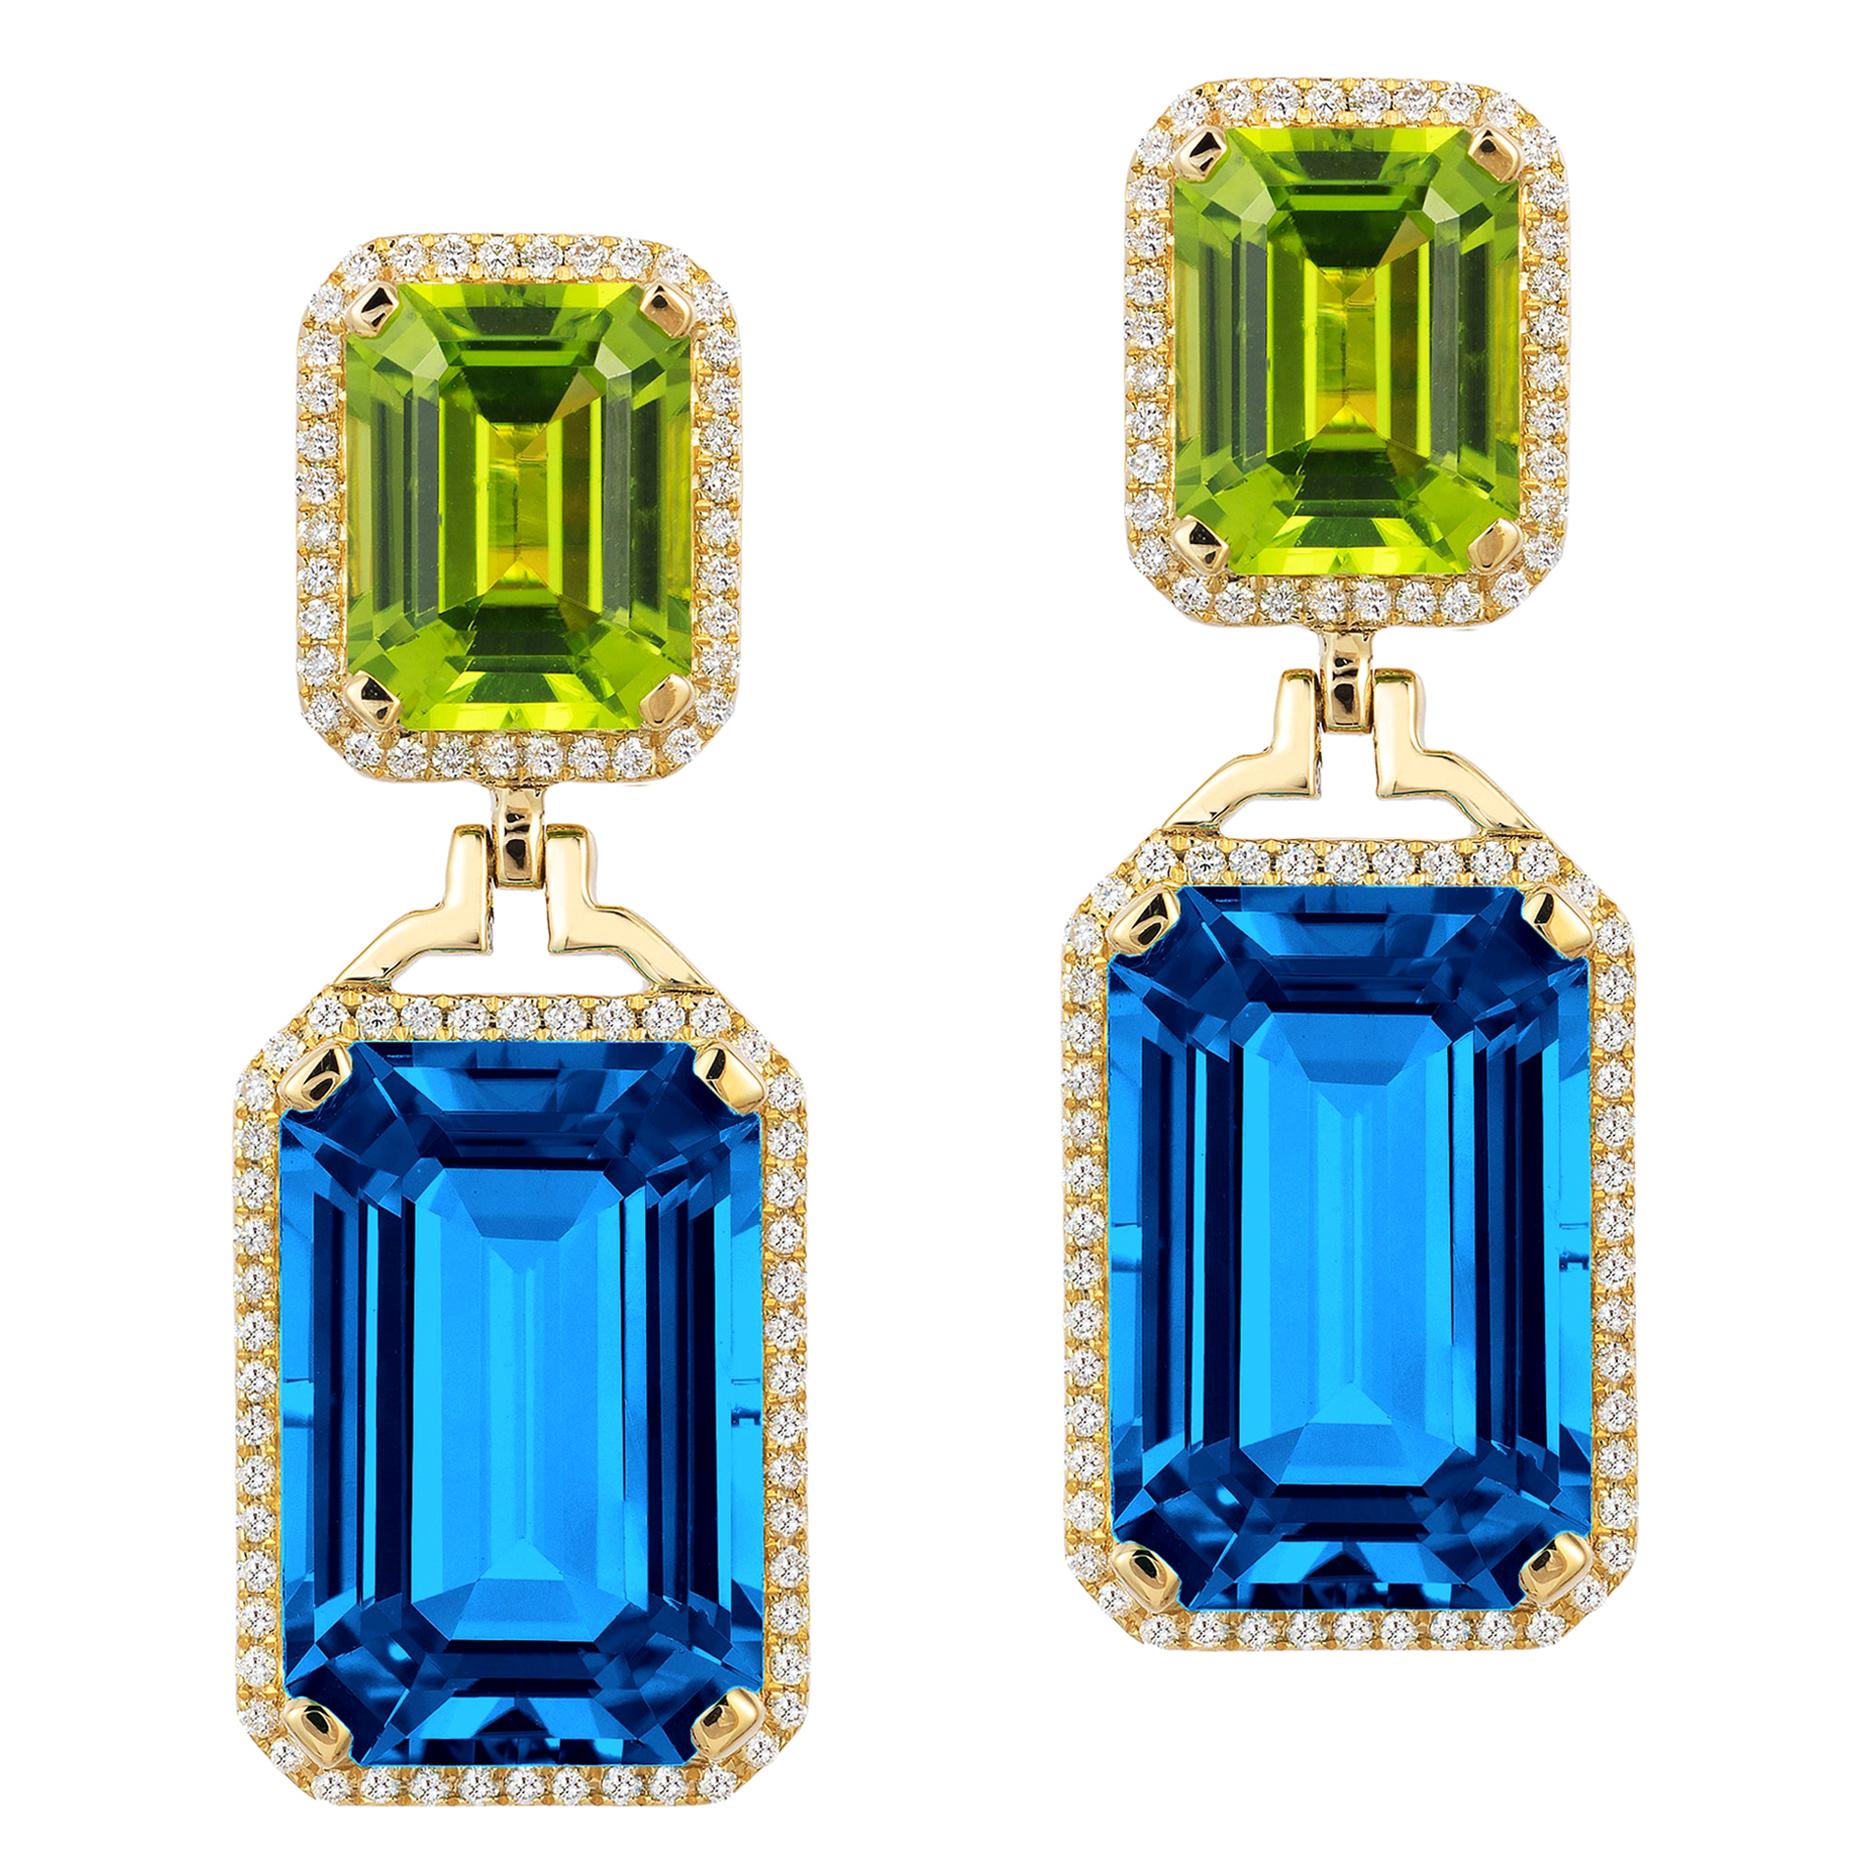 Goshwara London Blue Topaz Emerald Cut and Peridot with Diamonds Earrings